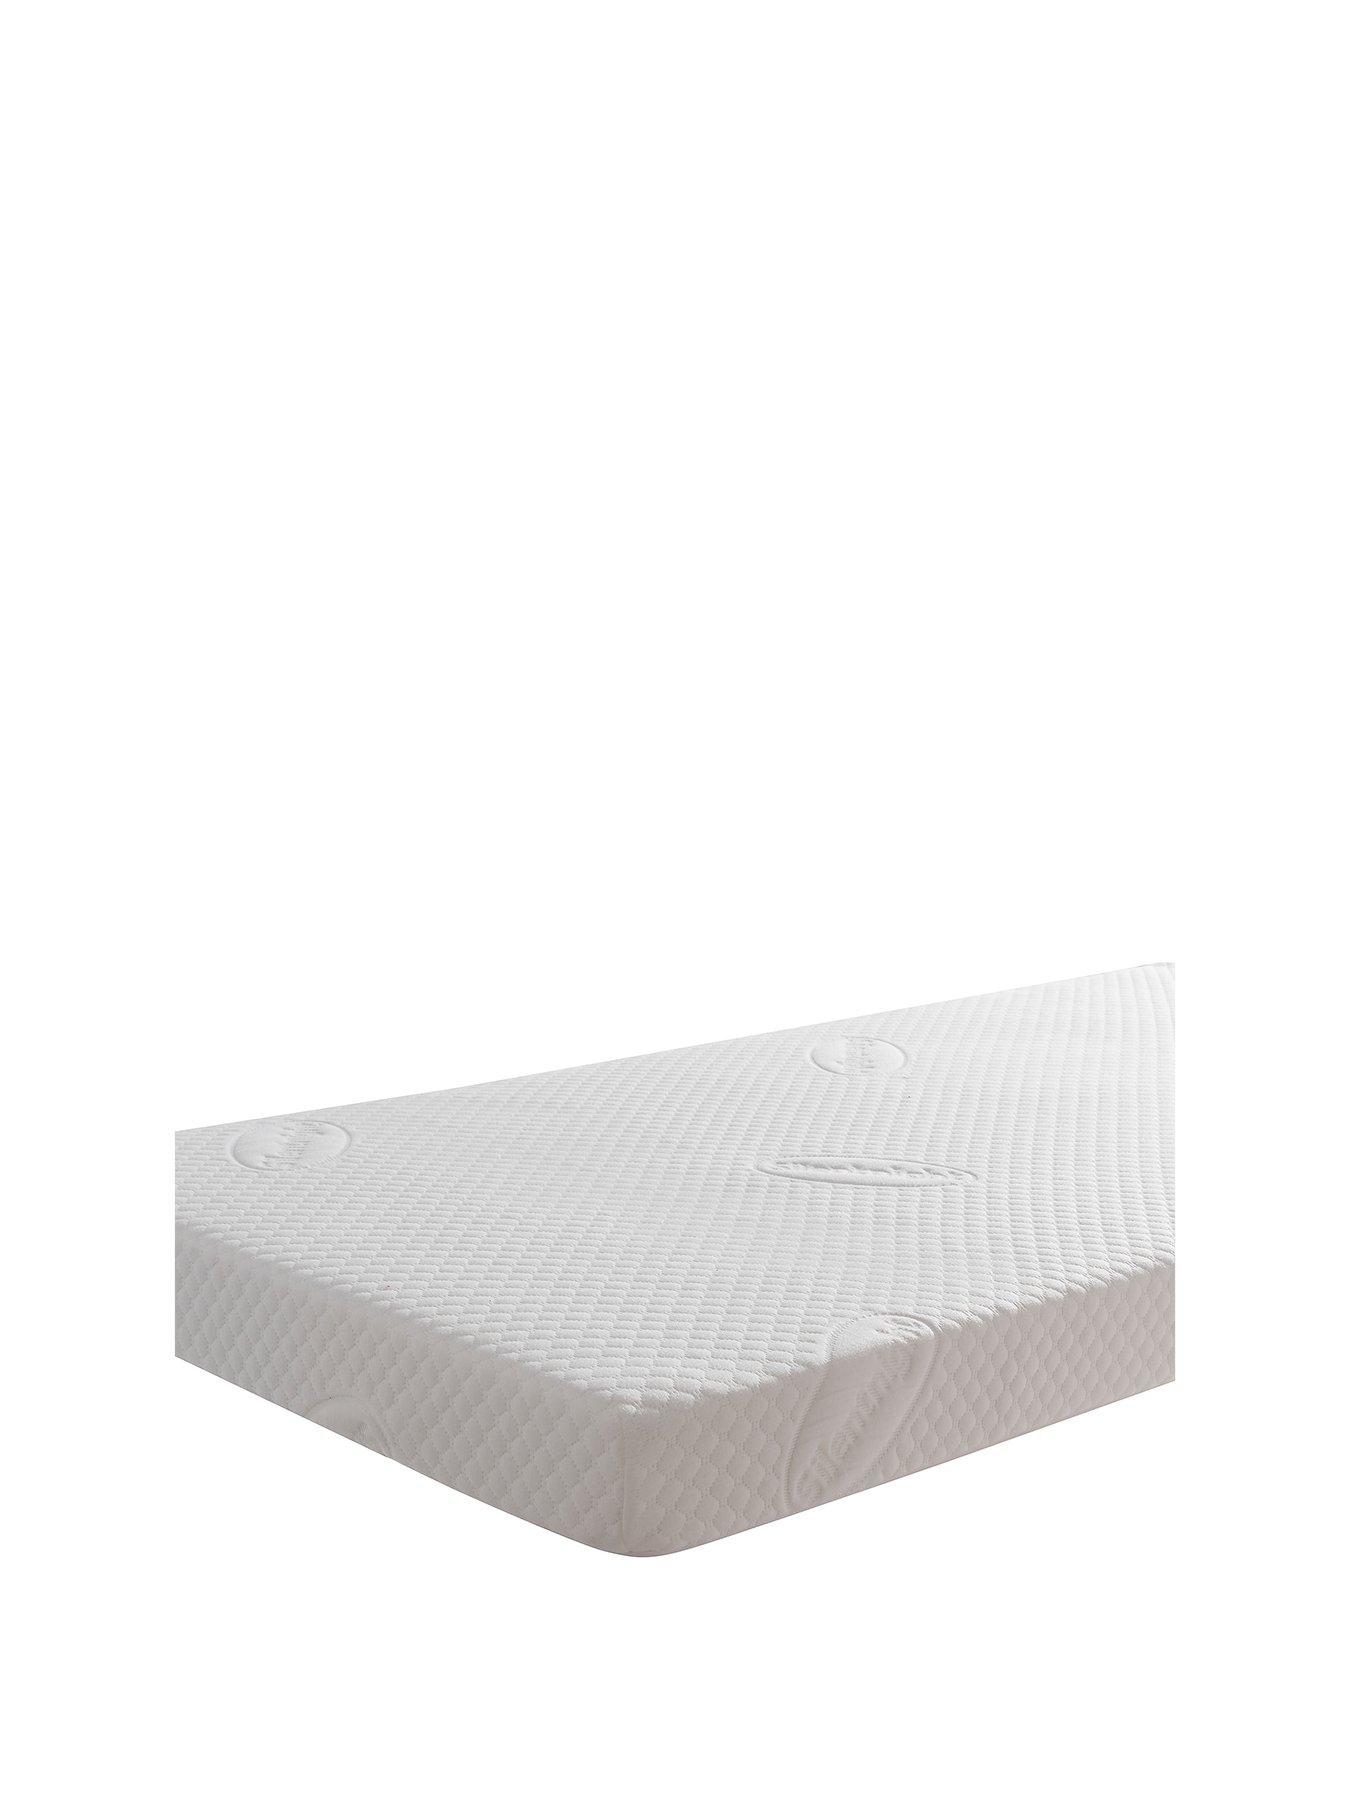 cot bed mattress